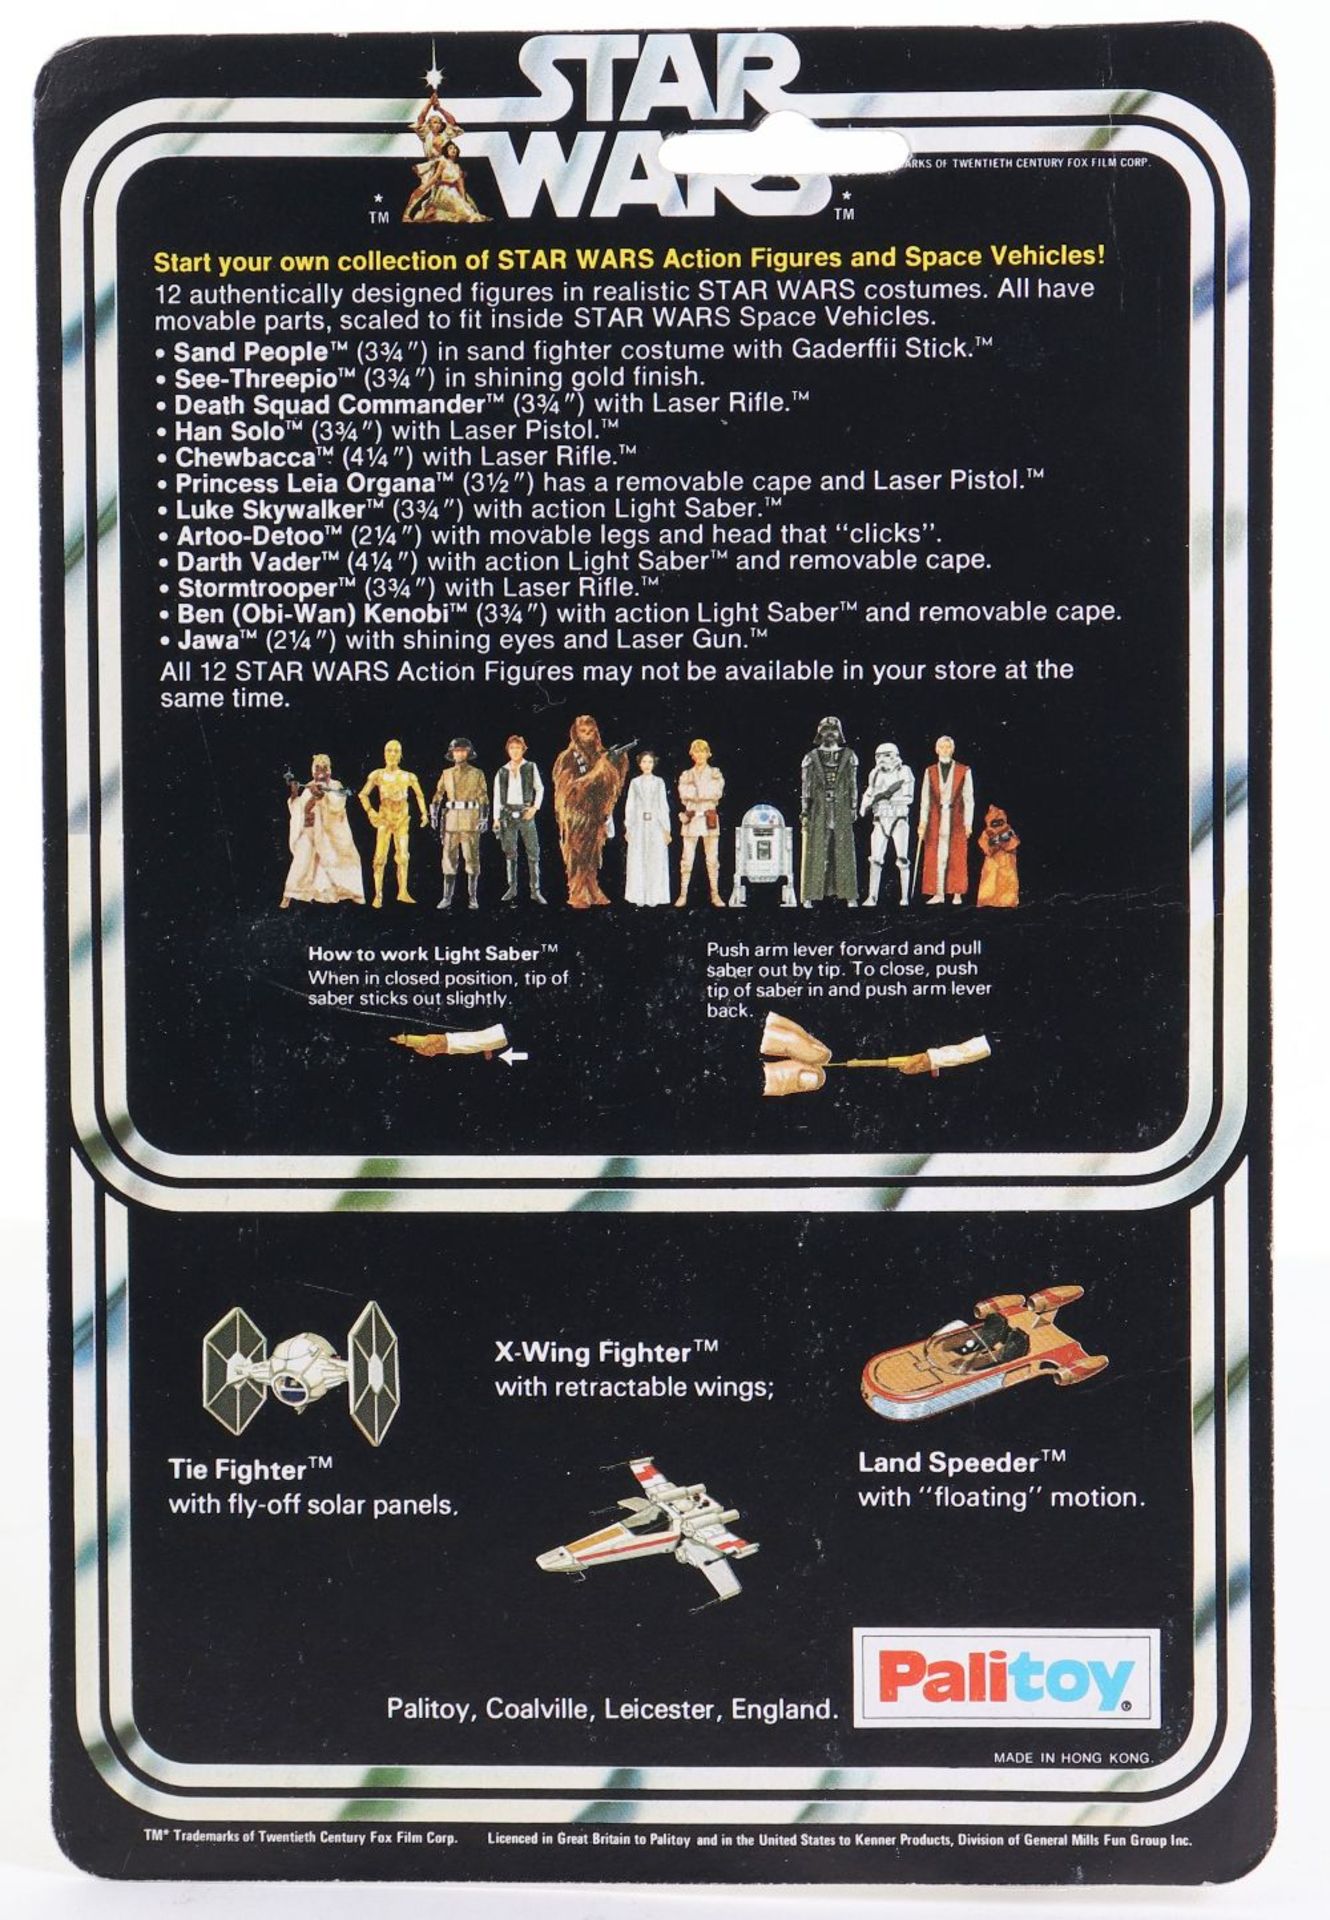 Palitoy Star Wars Stormtrooper Vintage Original Carded Figure - Image 2 of 6